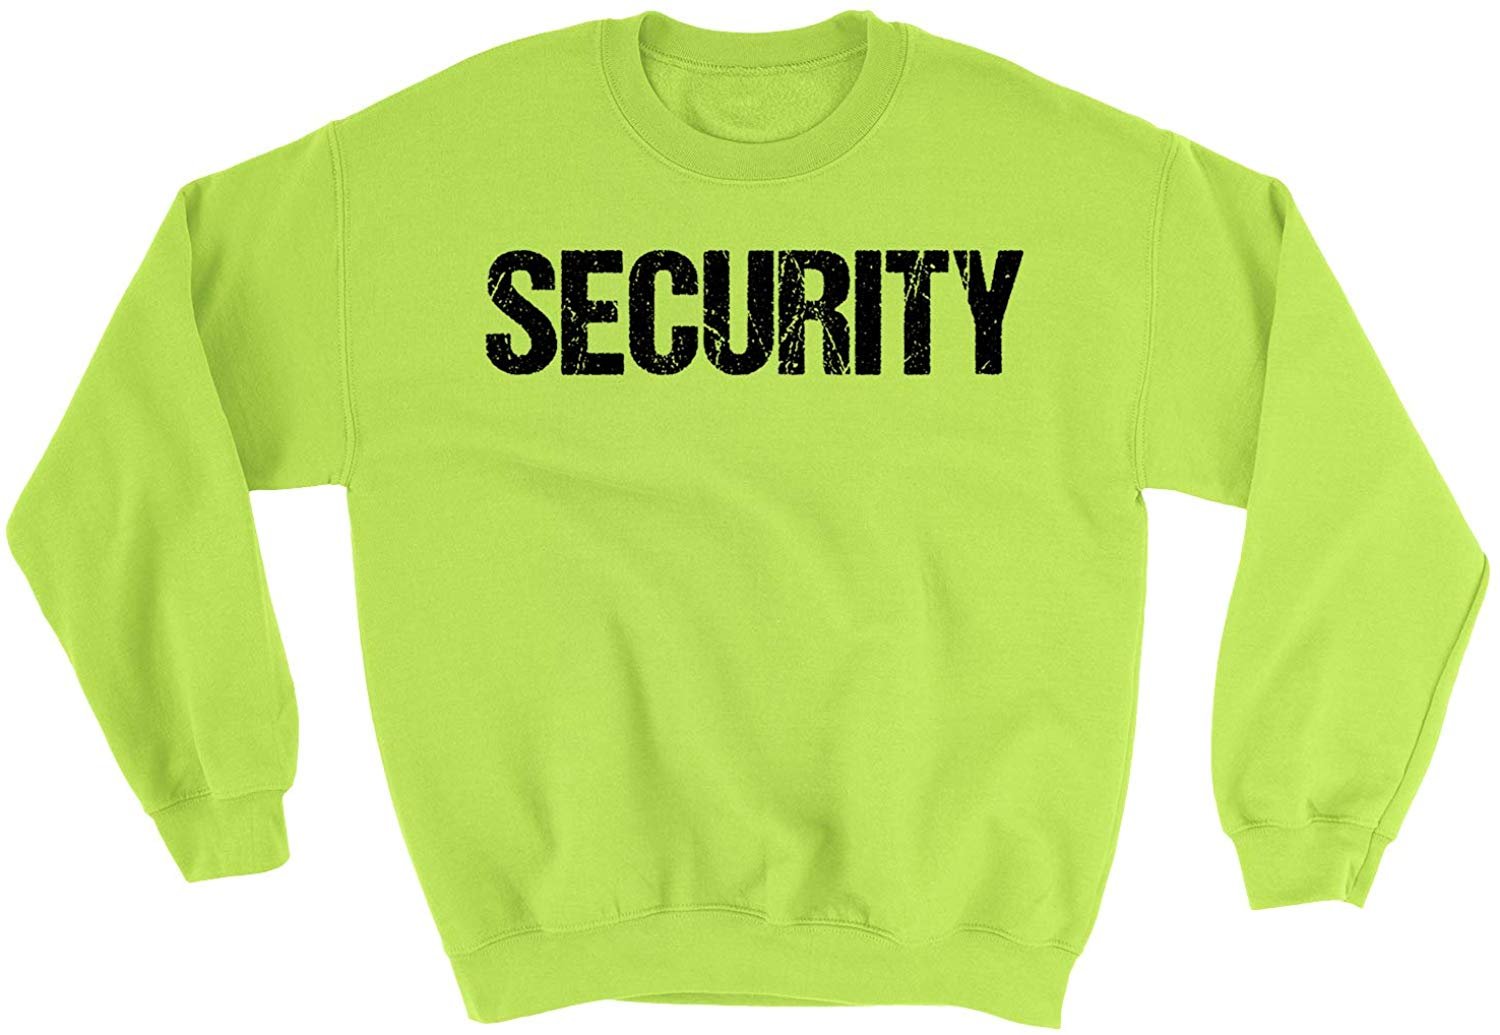 Men's Security Crewneck Sweatshirt (Distressed Design, Safety Green / Black)